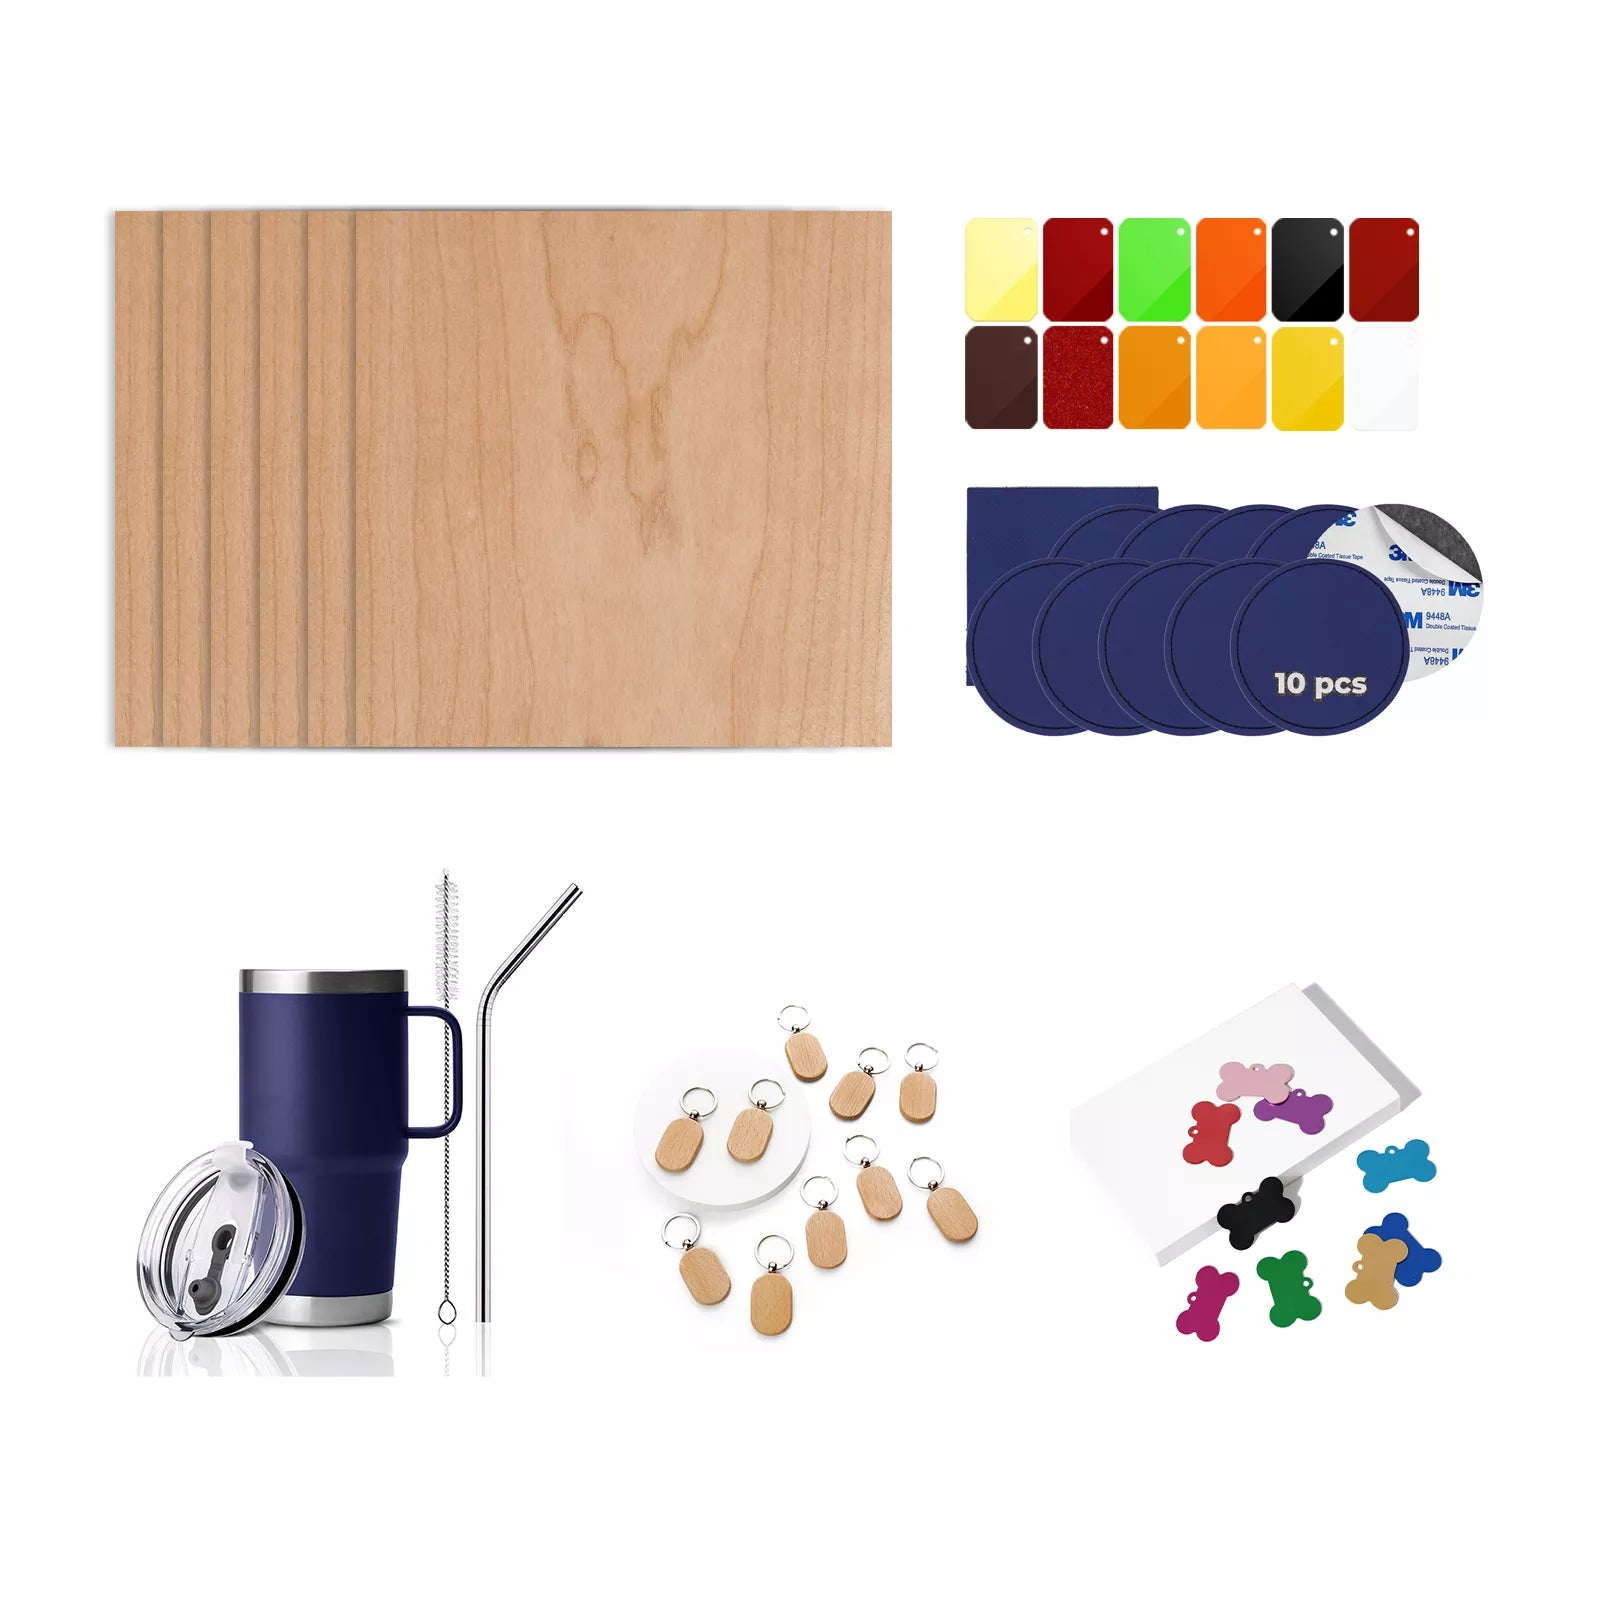 xTool Home & Living Material Kit (59pcs)